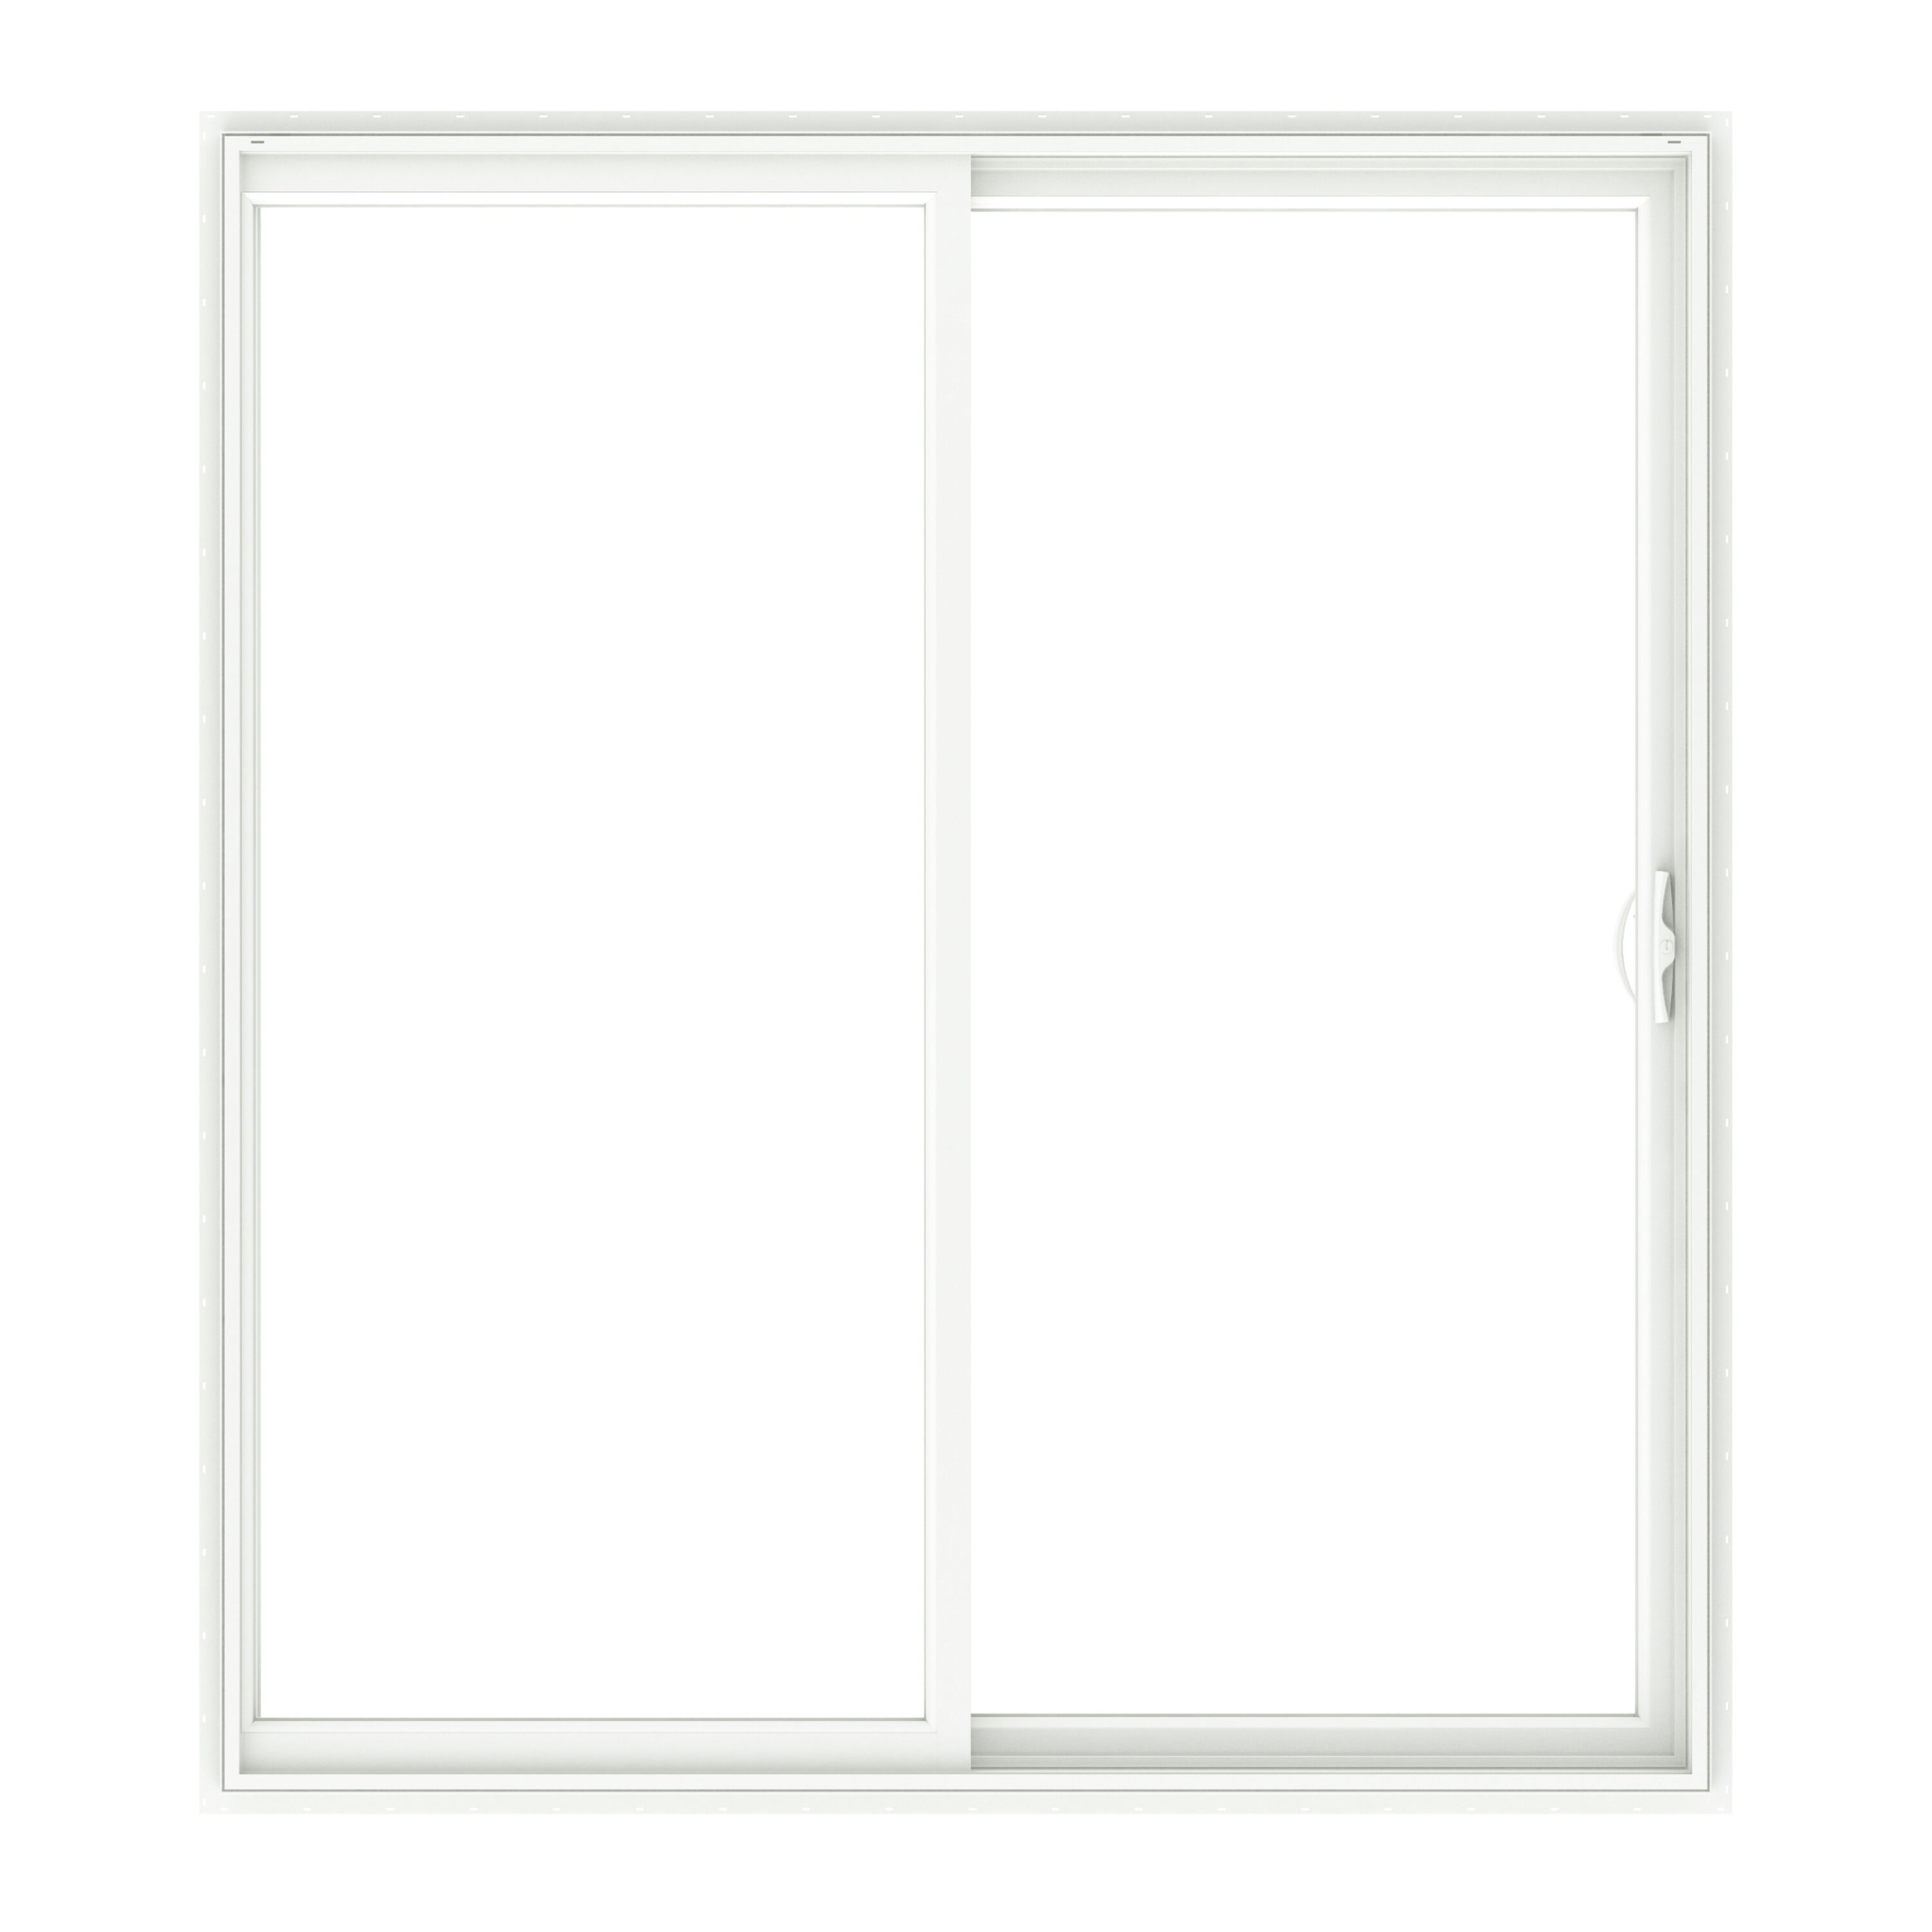 150 Series West 96-in x 96-in Low-e Argon White Vinyl Sliding Right-Hand Sliding Double Patio Door | - Pella 1000011504